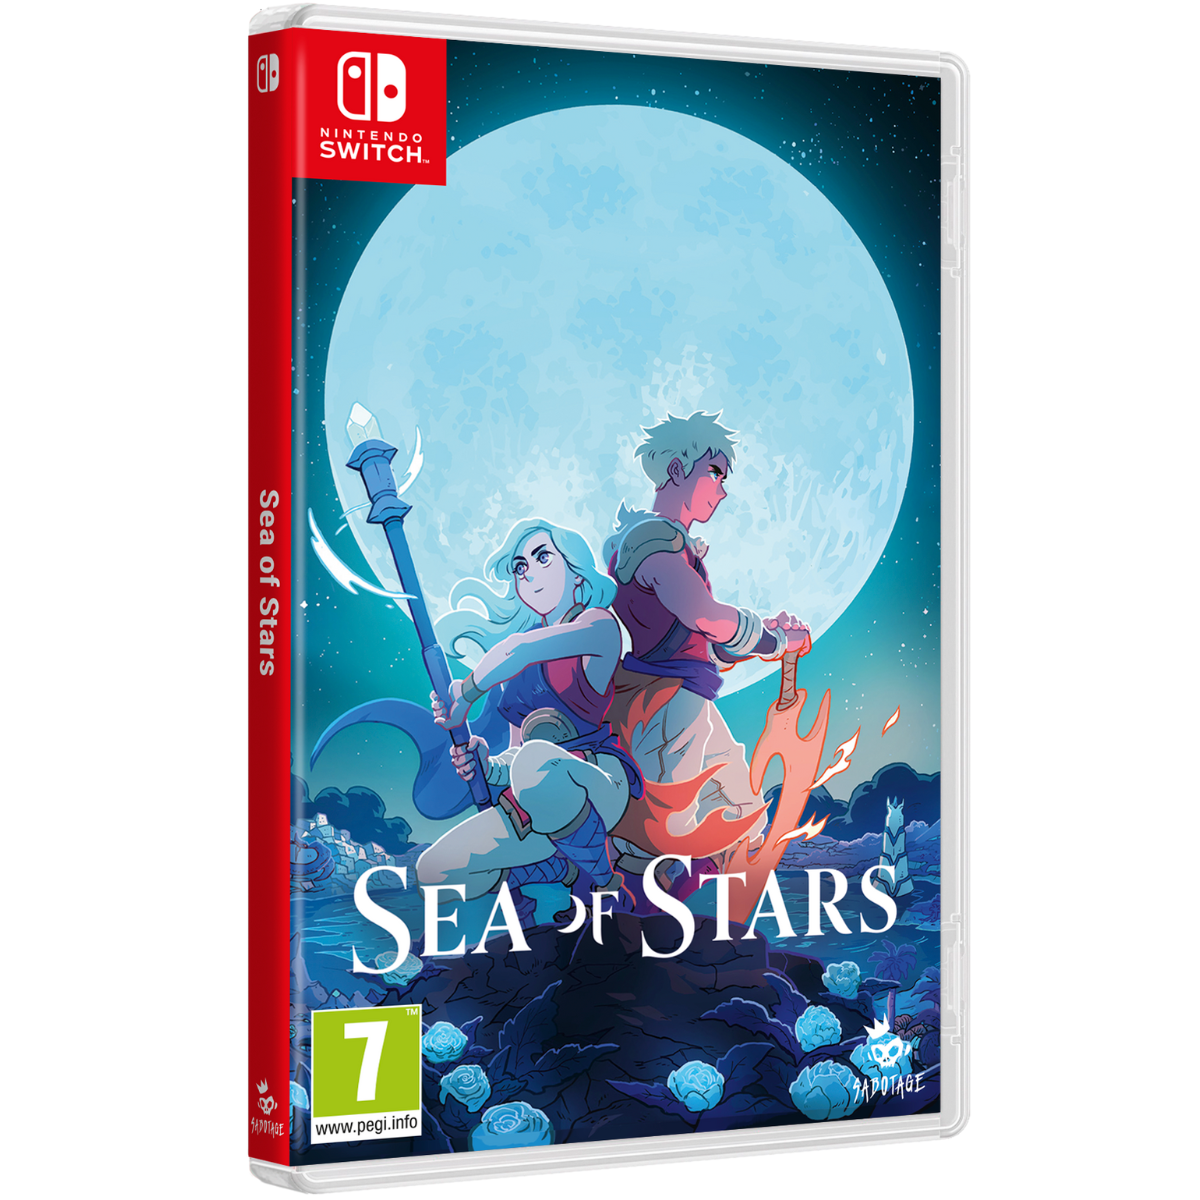 Sea of stars - Nintendo SWITCH